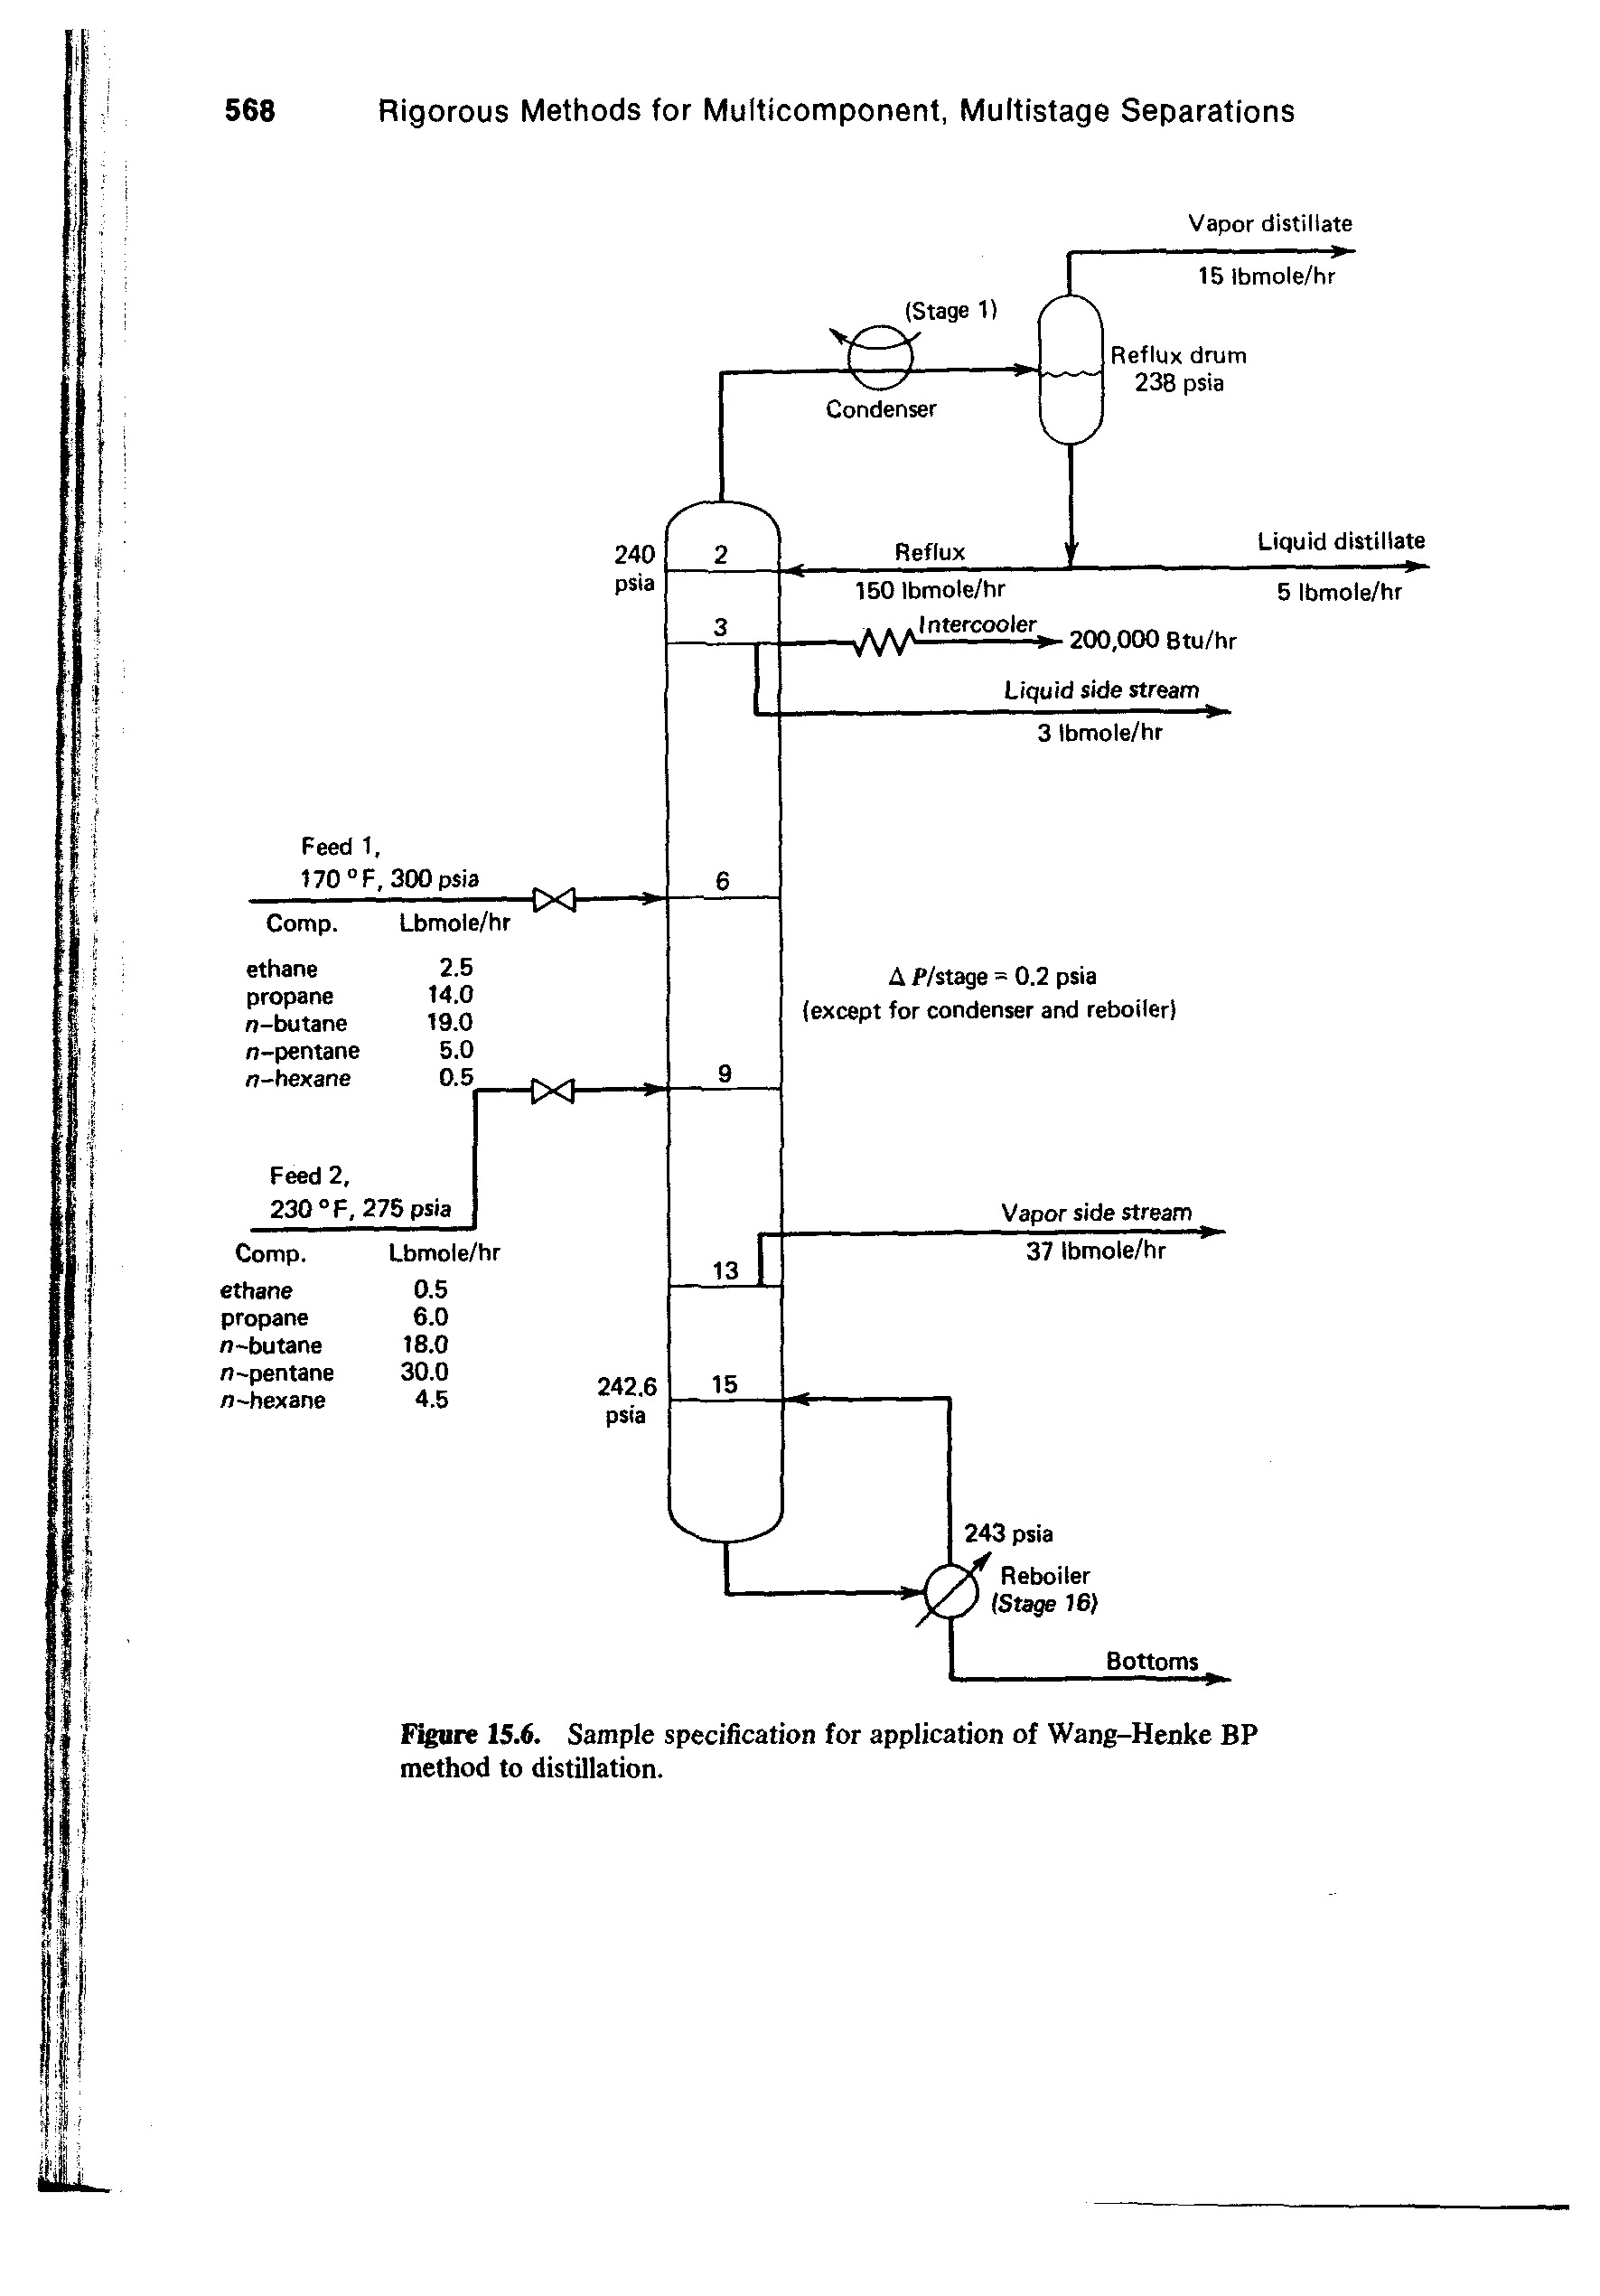 Figure 15.6. Sample specification for application of Wang-Henke BP method to distillation.